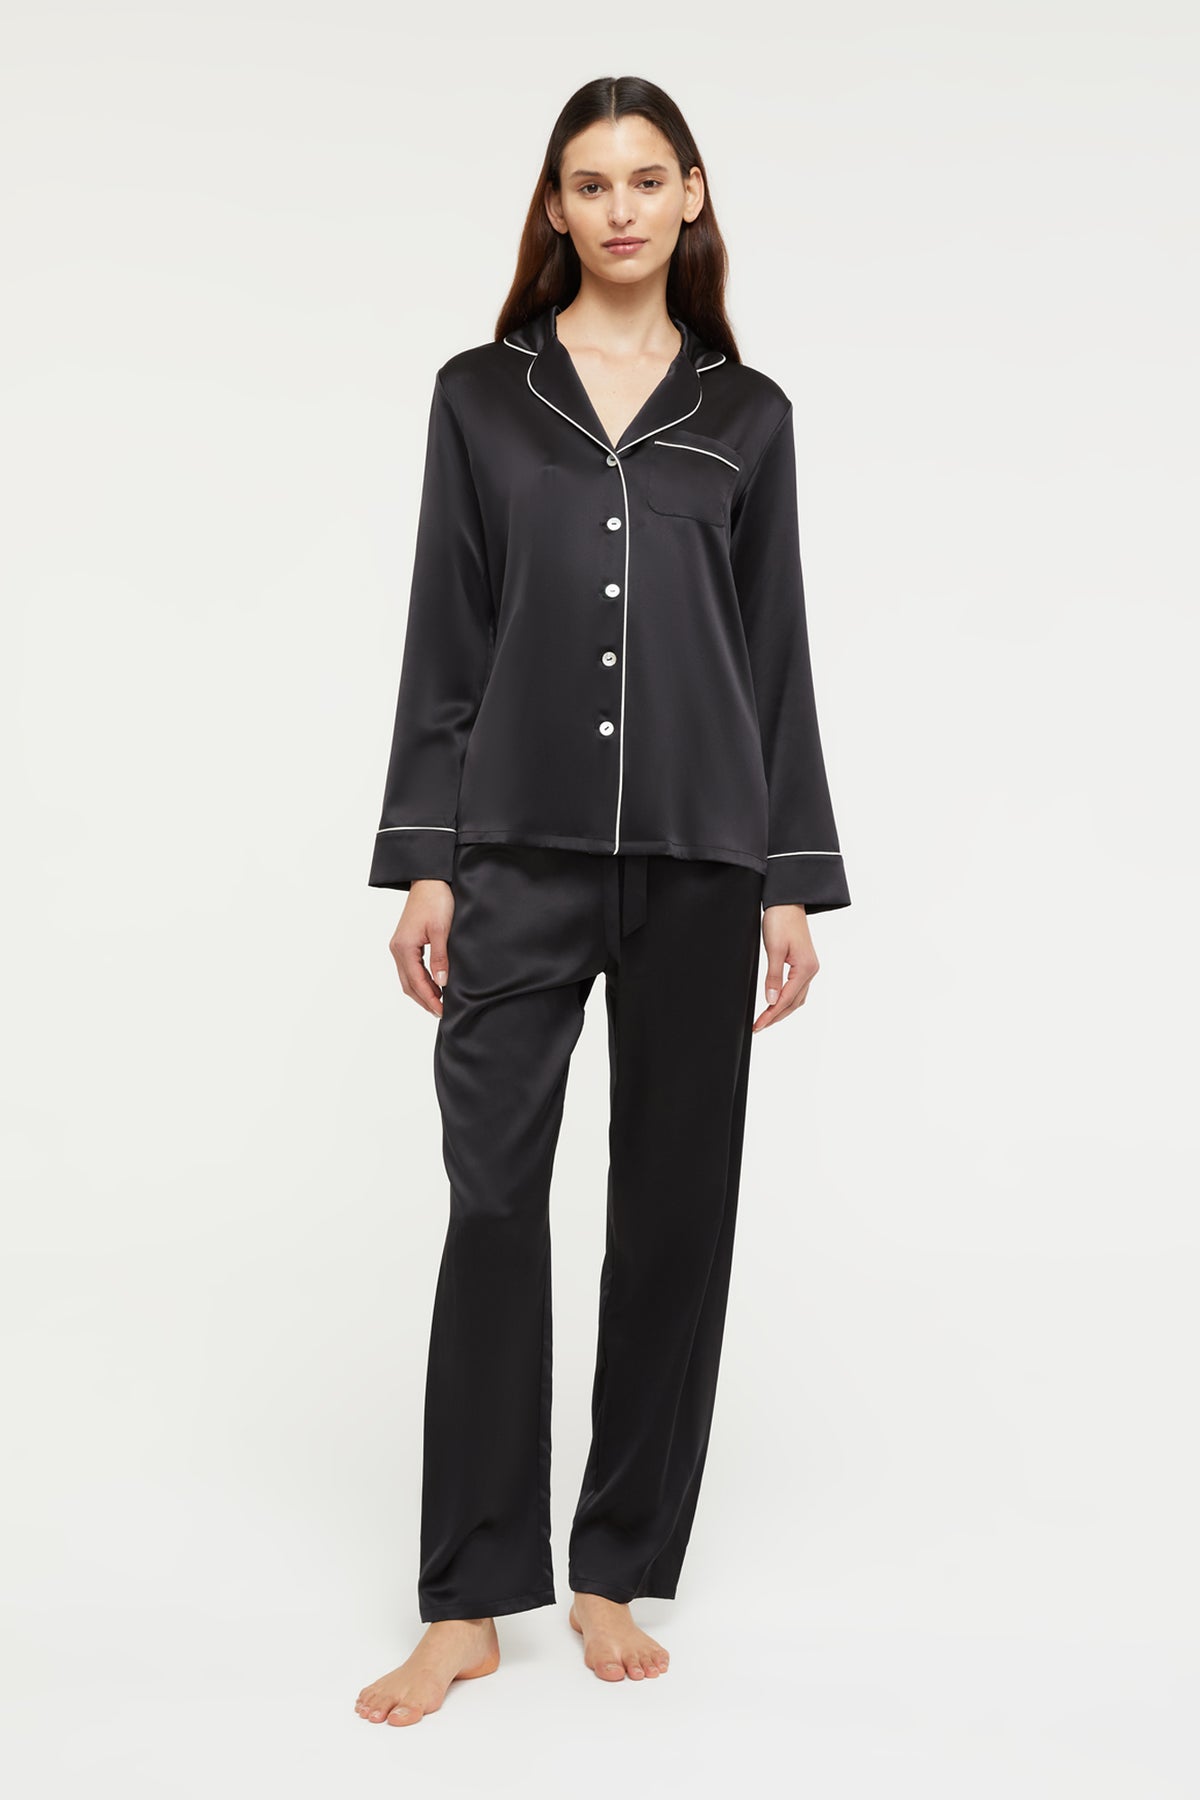 GINIA Fine Finishes Pyjama in Black/Creme Piping - 100% 19mm Silk Grade 6A